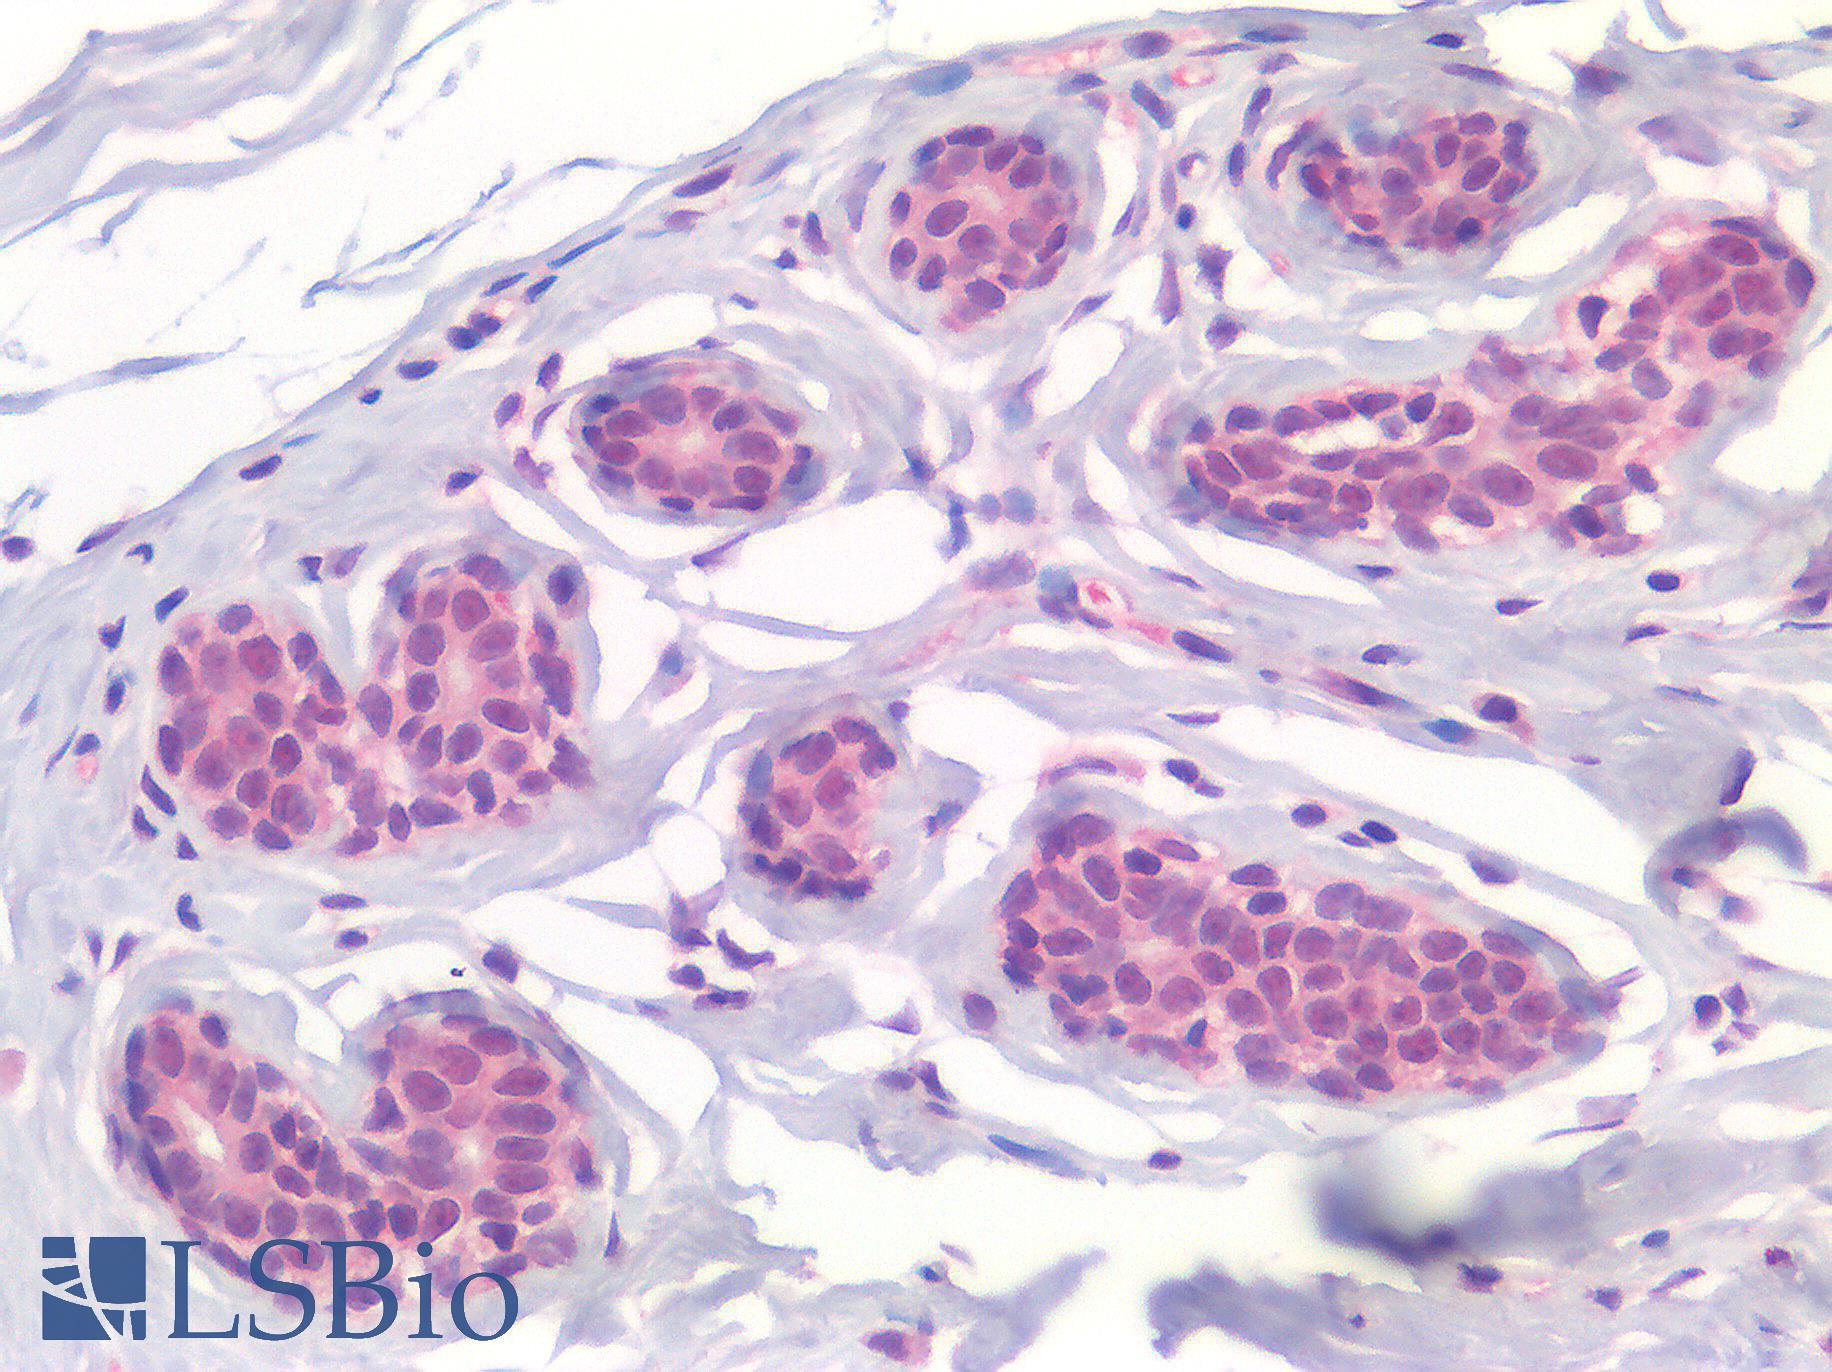 p14ARF / CDKN2A Antibody - Human Breast: Formalin-Fixed, Paraffin-Embedded (FFPE)